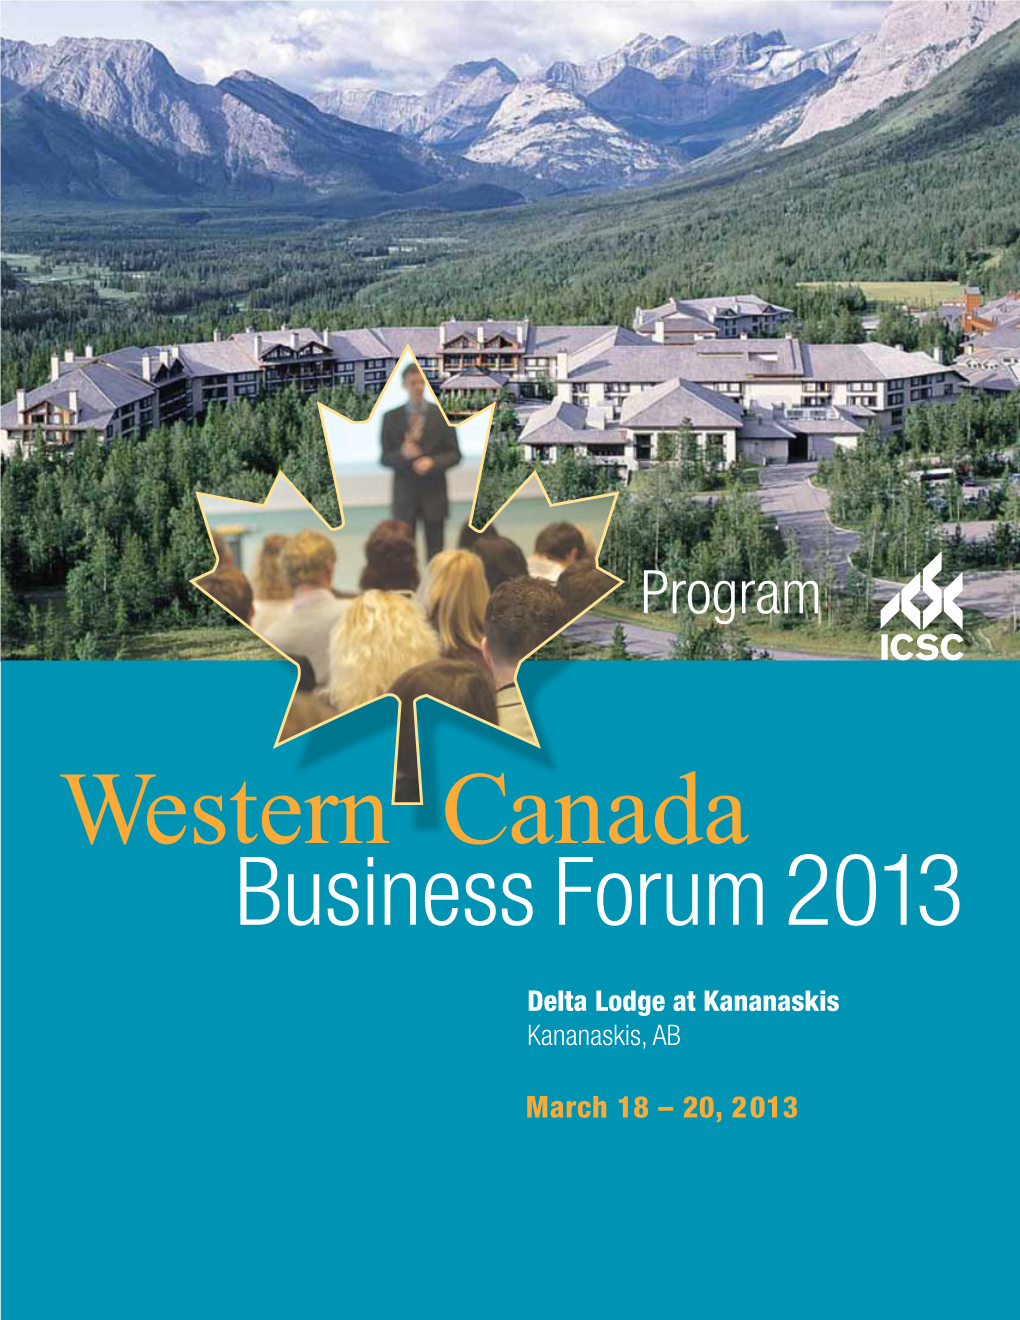 Western Canada Business Forum 2013